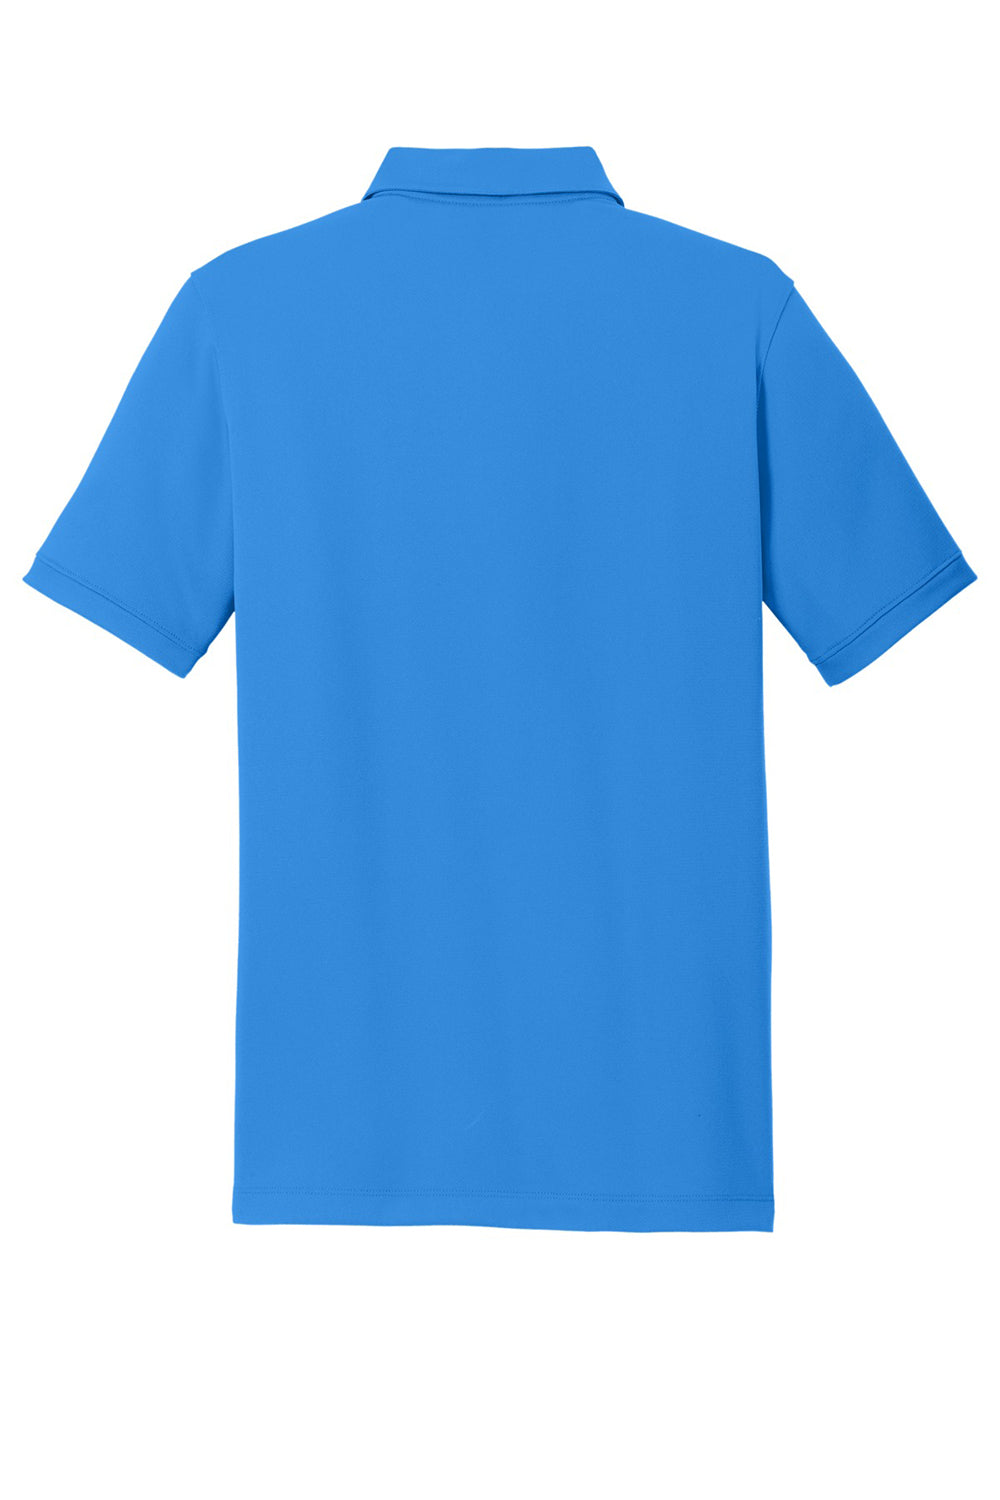 Nike 746099 Mens Icon Dri-Fit Moisture Wicking Short Sleeve Polo Shirt Light Photo Blue Flat Back